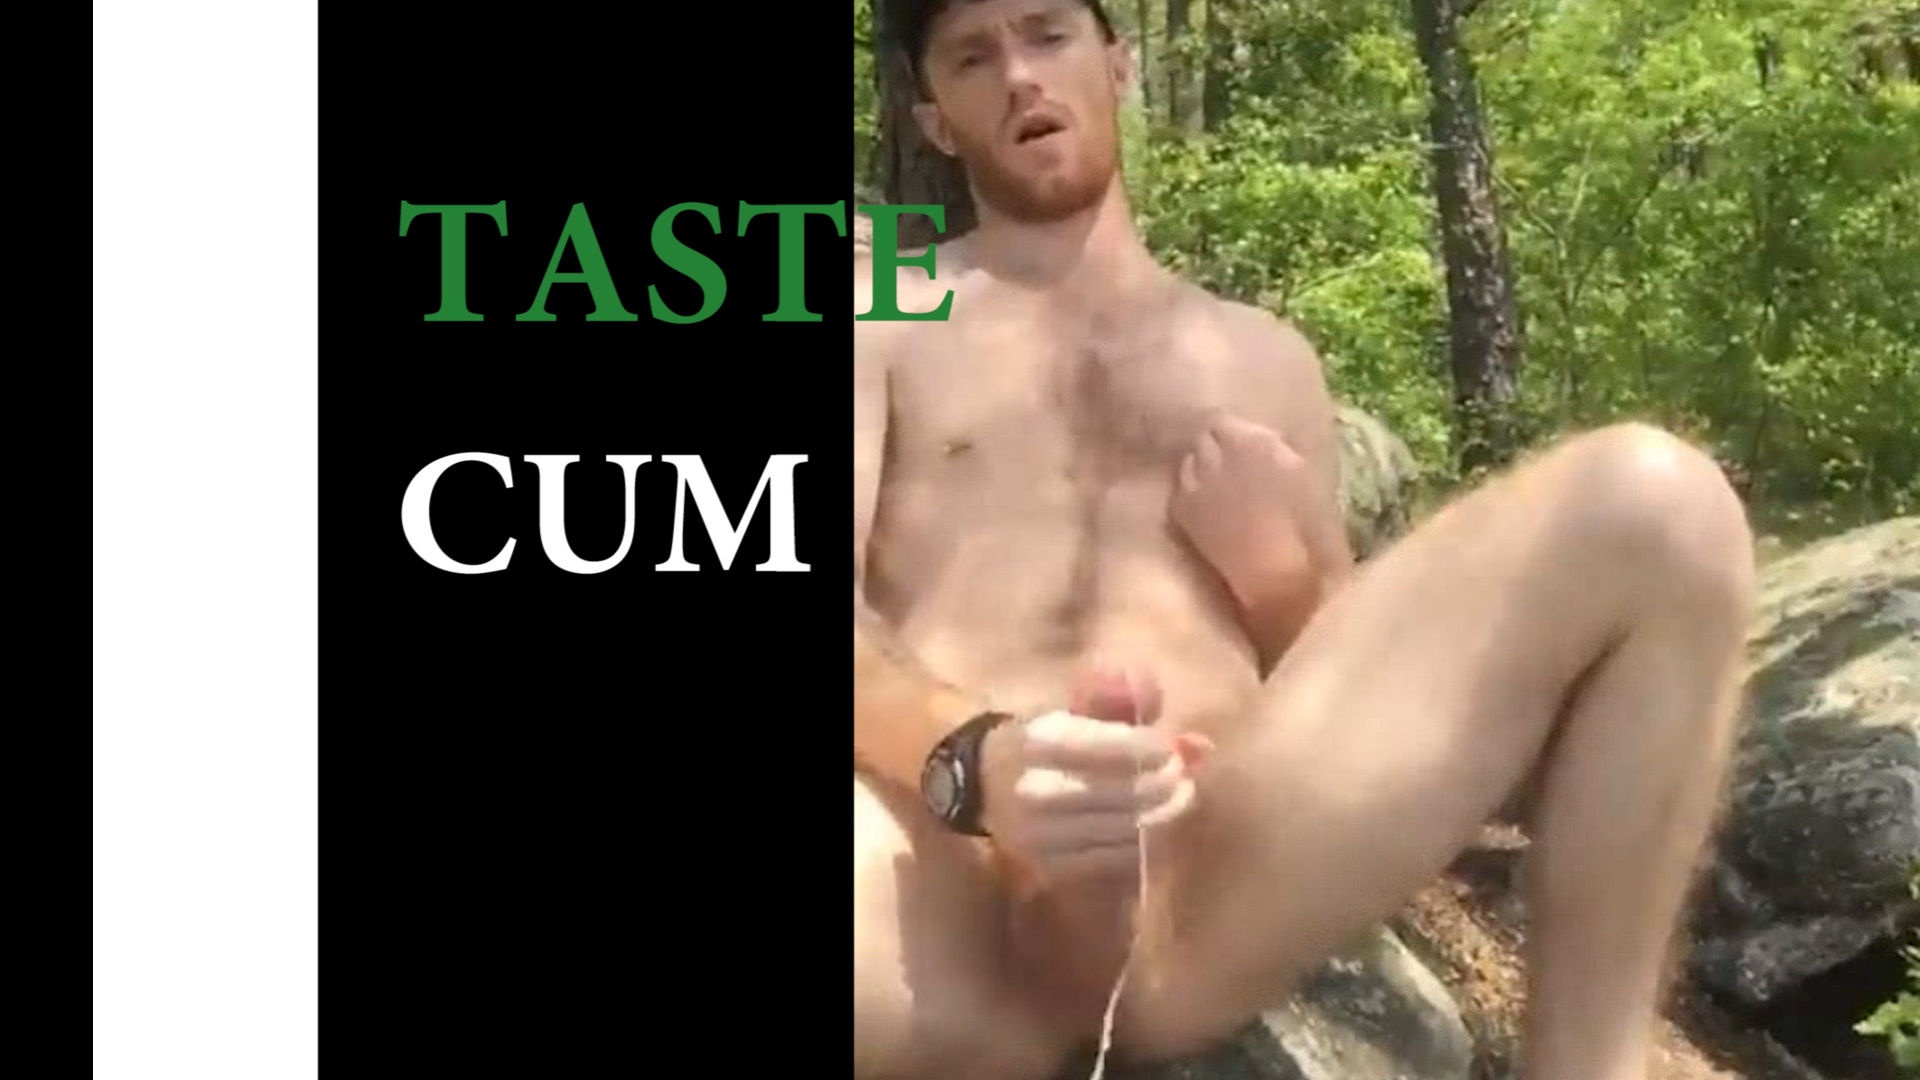 Taste his own cum